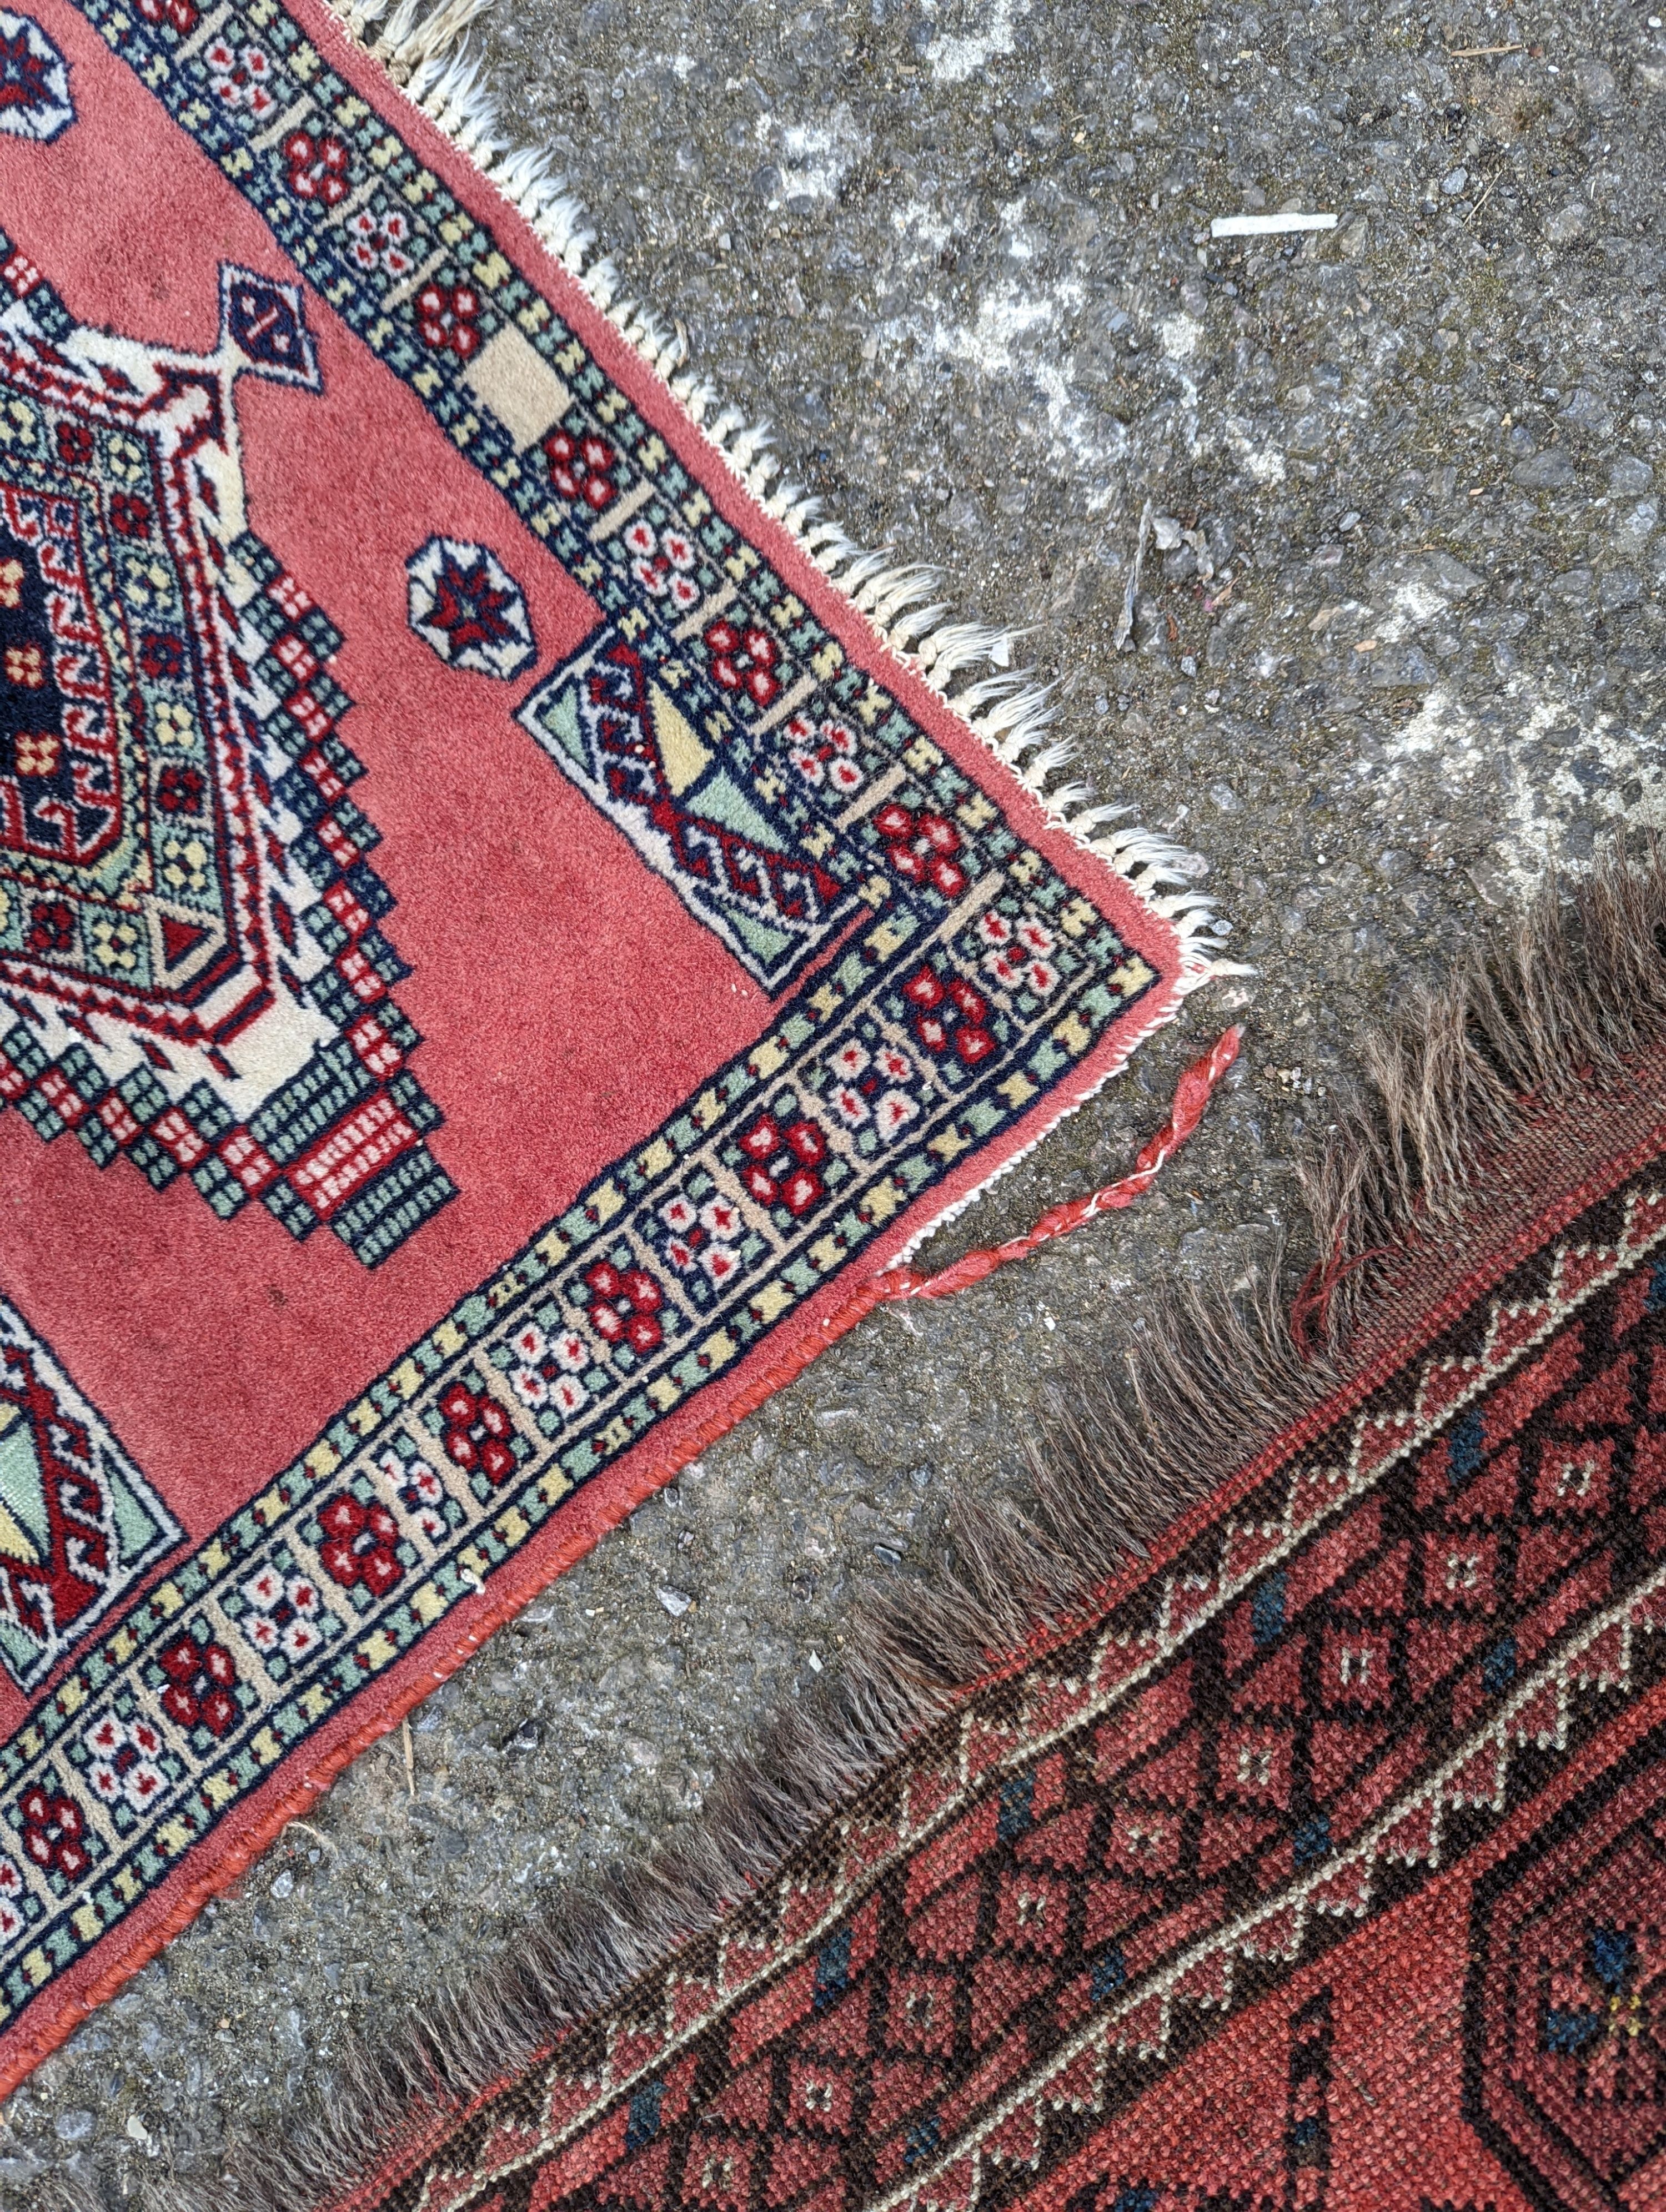 A North West Persian blue ground runner, 300 x 109 (worn and holed) a North West Persian rug, Bohara rug and mat